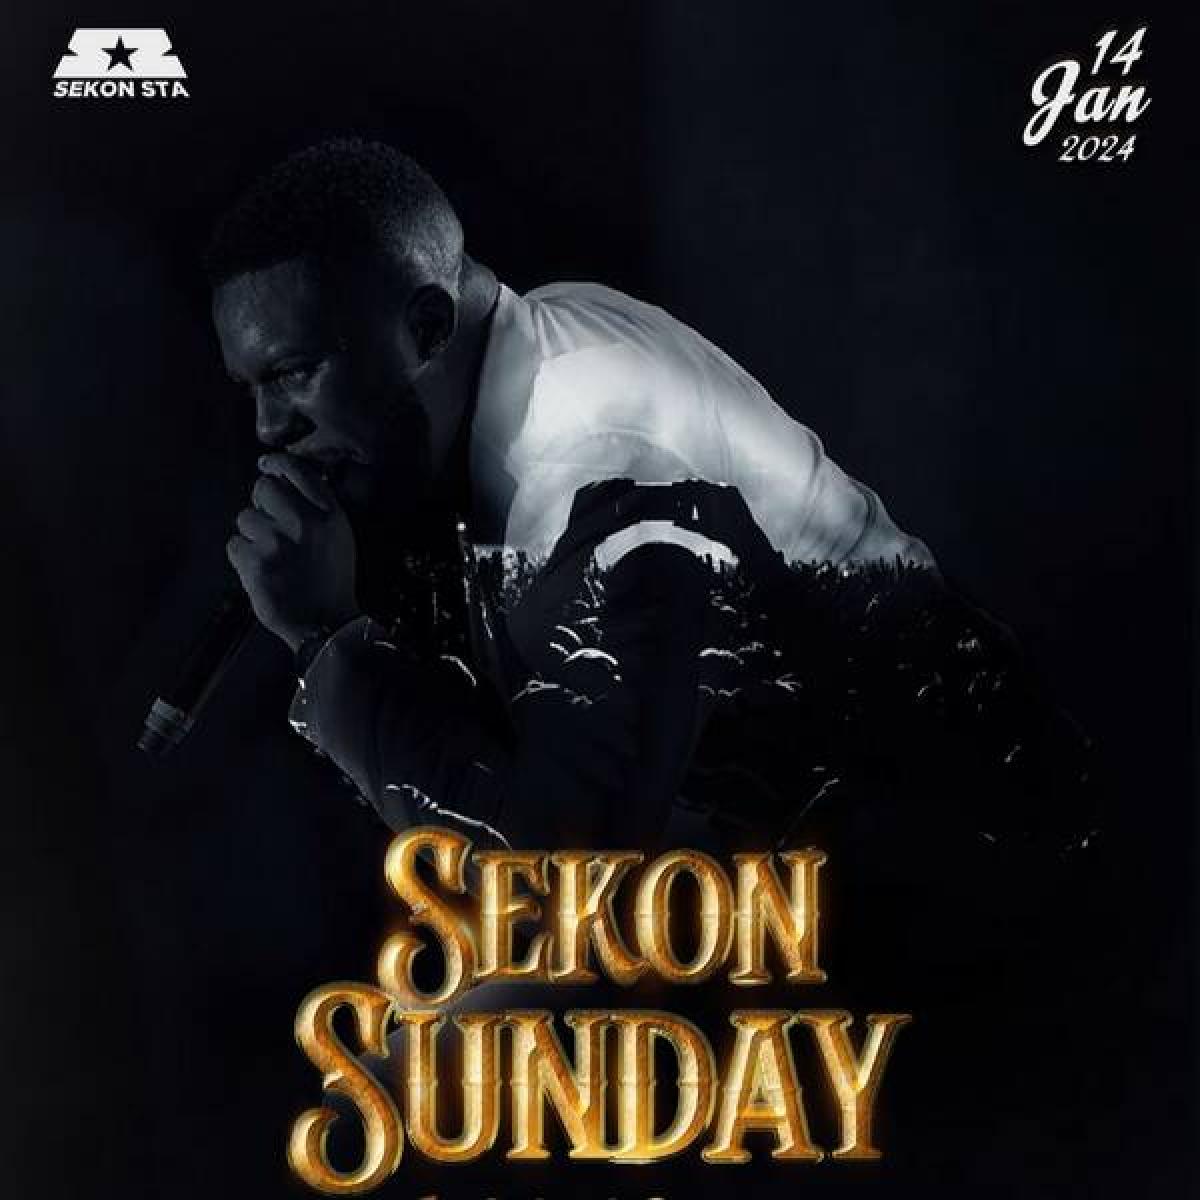 Sekon Sunday flyer or graphic.